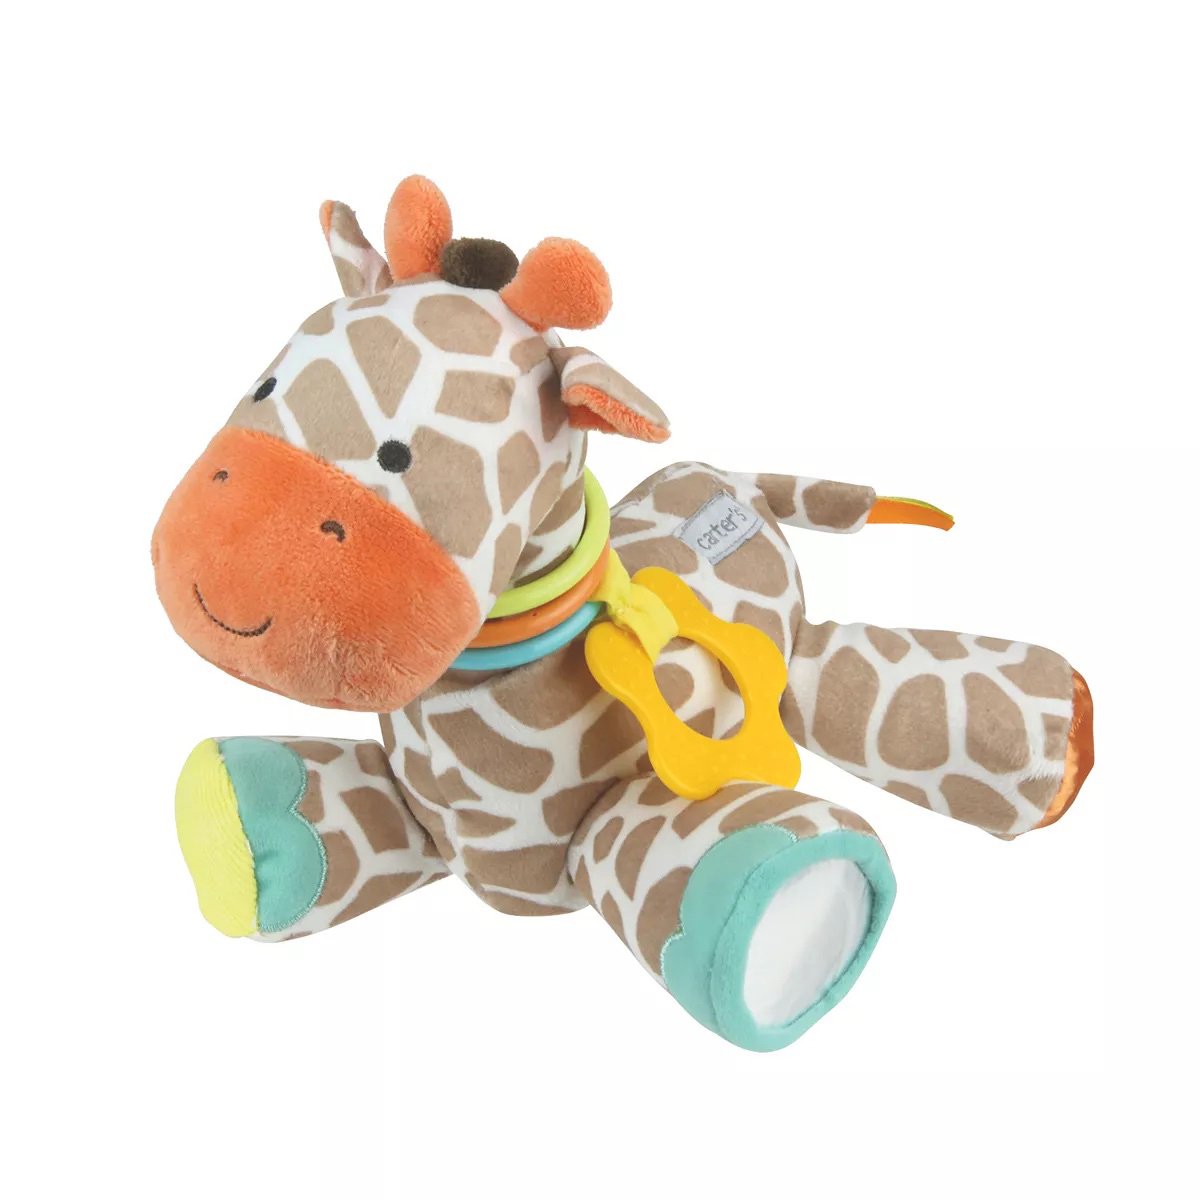 Carters(R) Giraffe Activity Toy